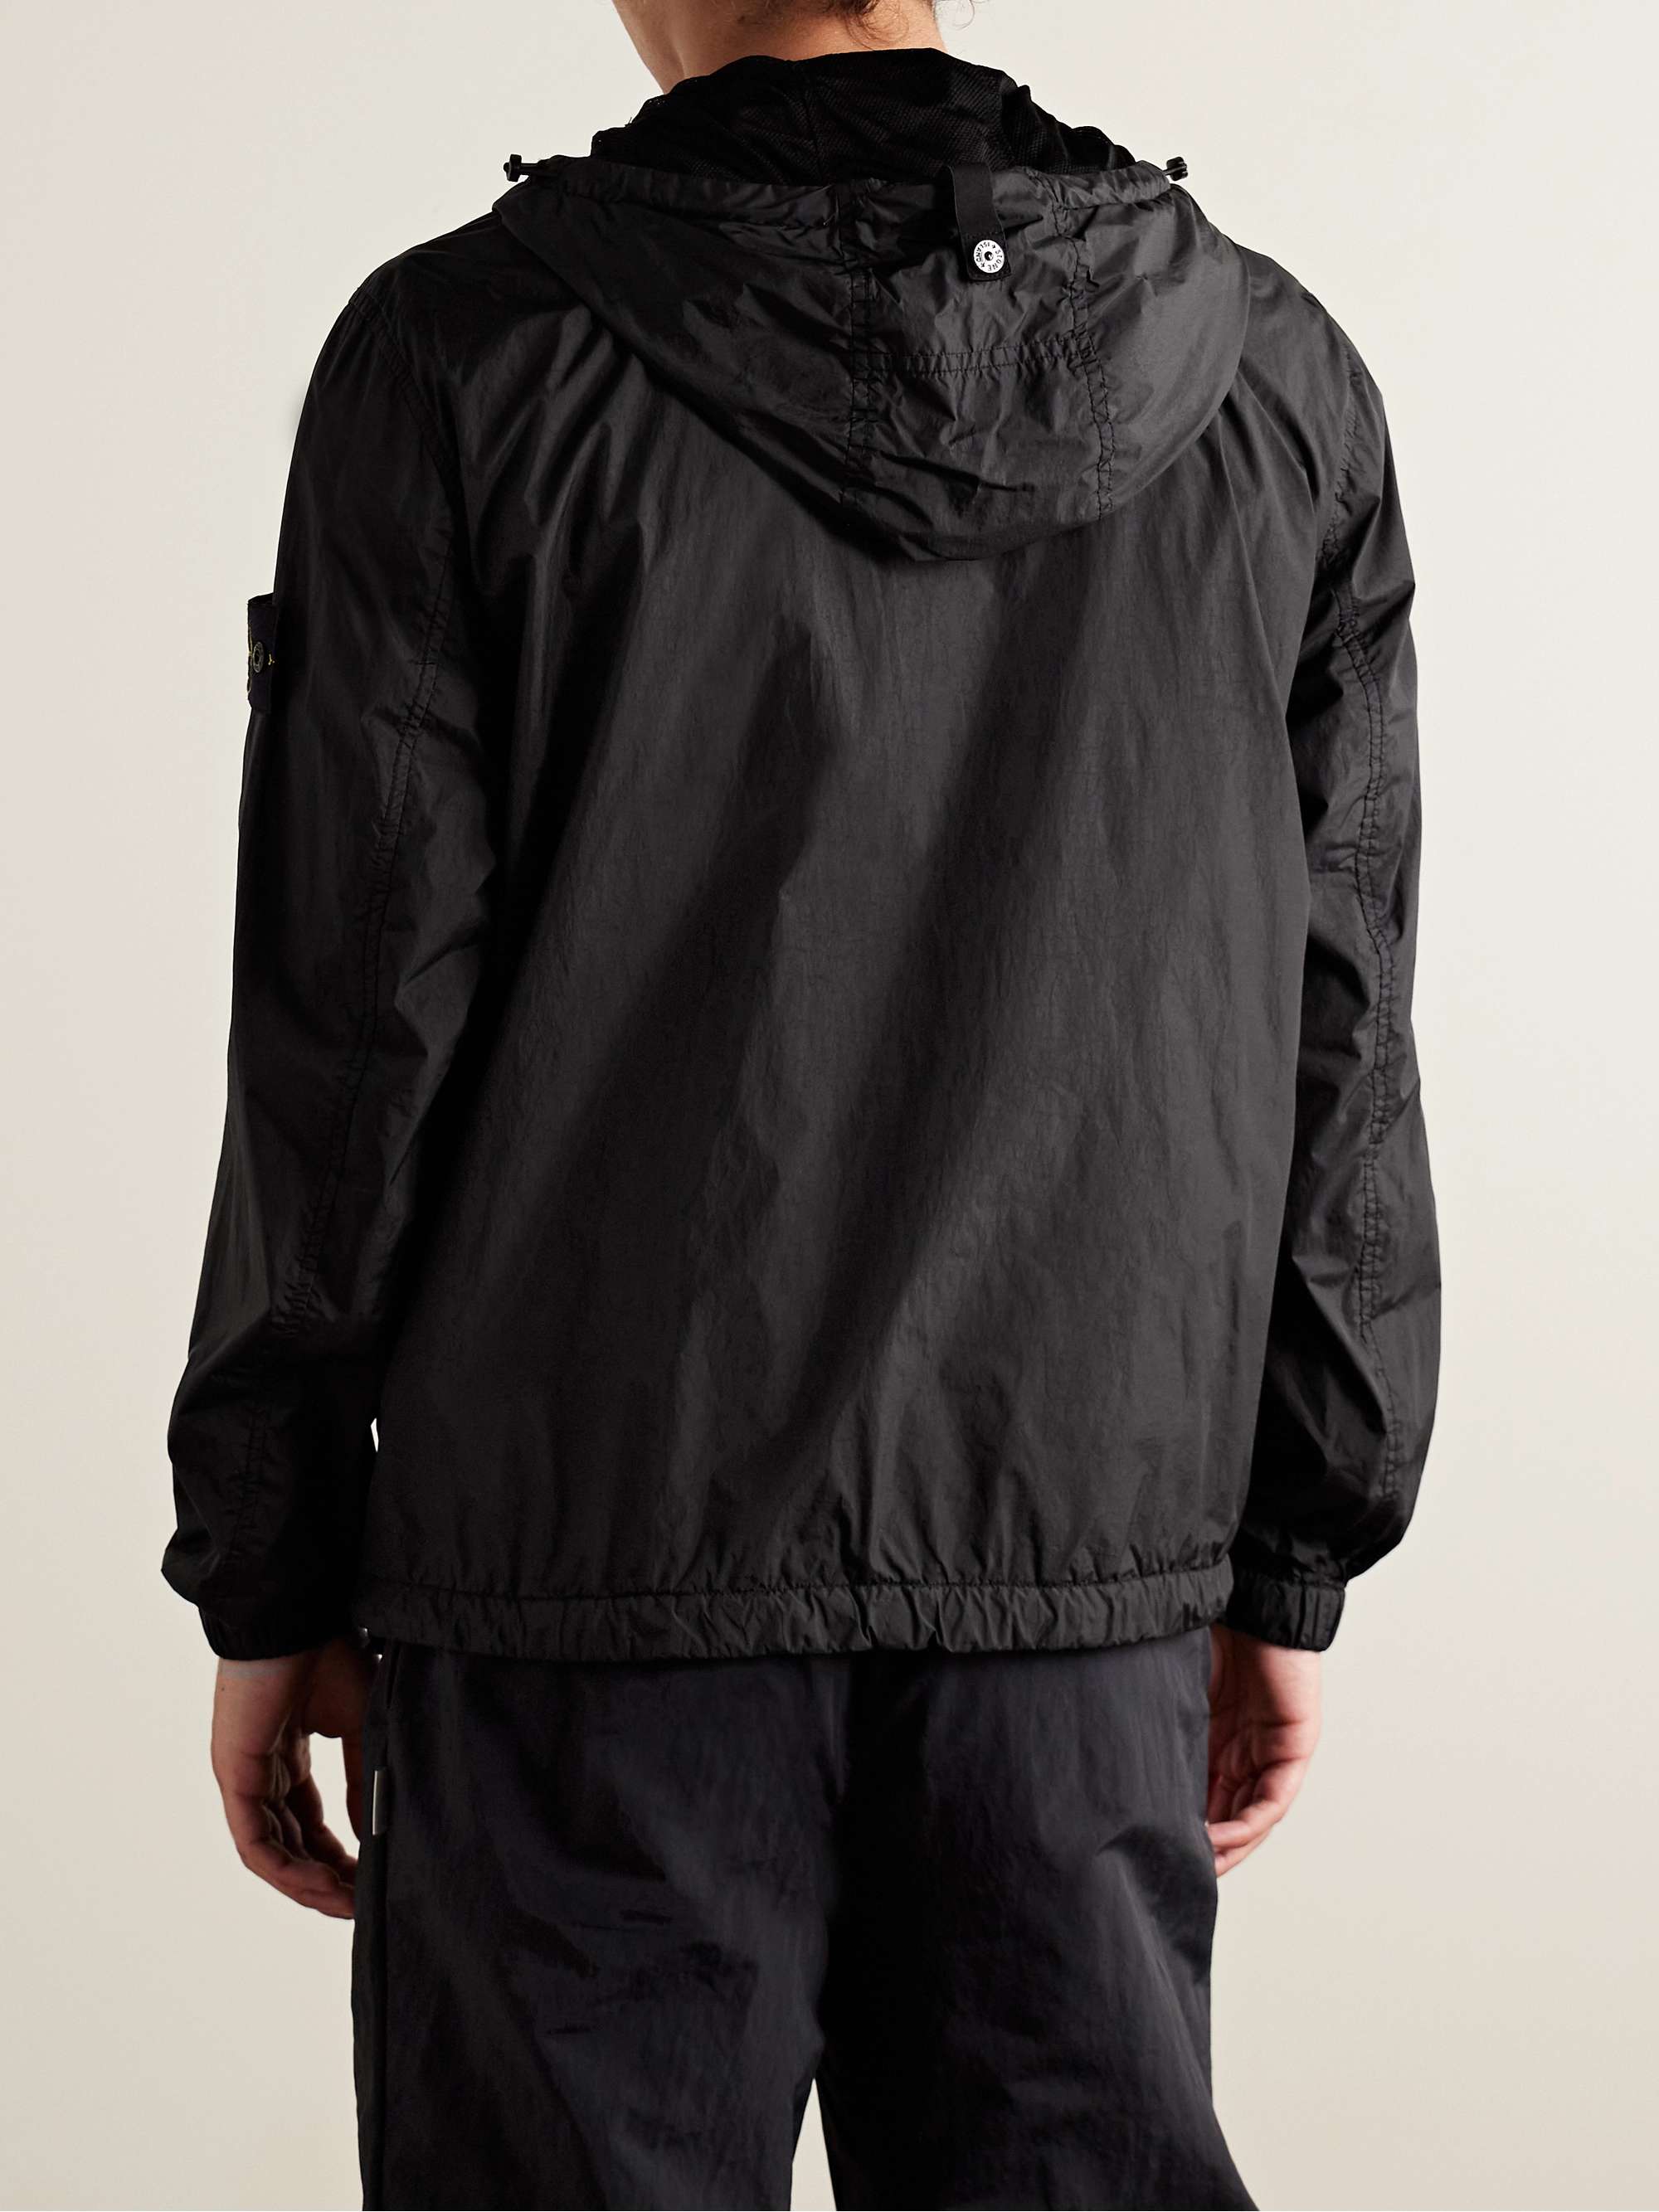 STONE ISLAND Logo-Appliquéd Crinkle Reps Nylon Hooded Jacket for Men ...